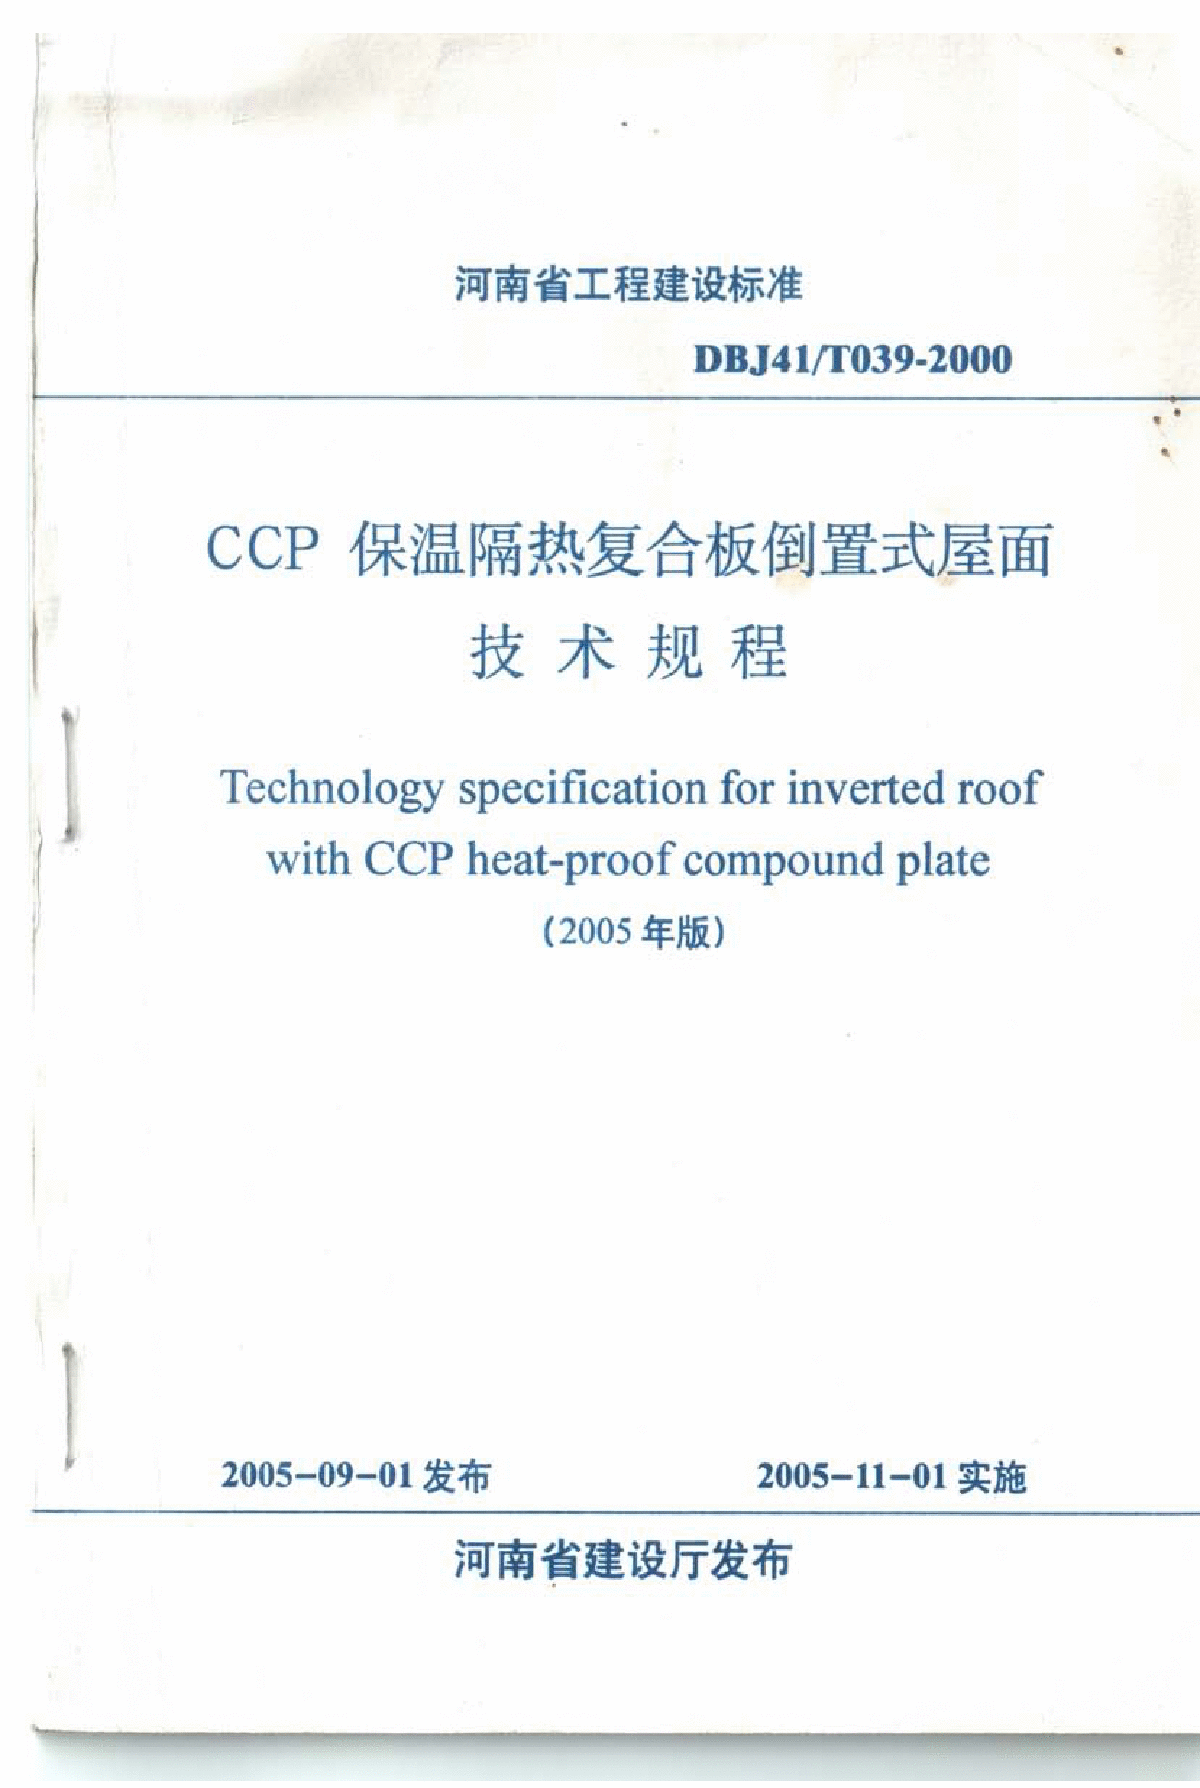 DBJ41T039-2000CCP保温隔热复合板倒置式屋面技术规程